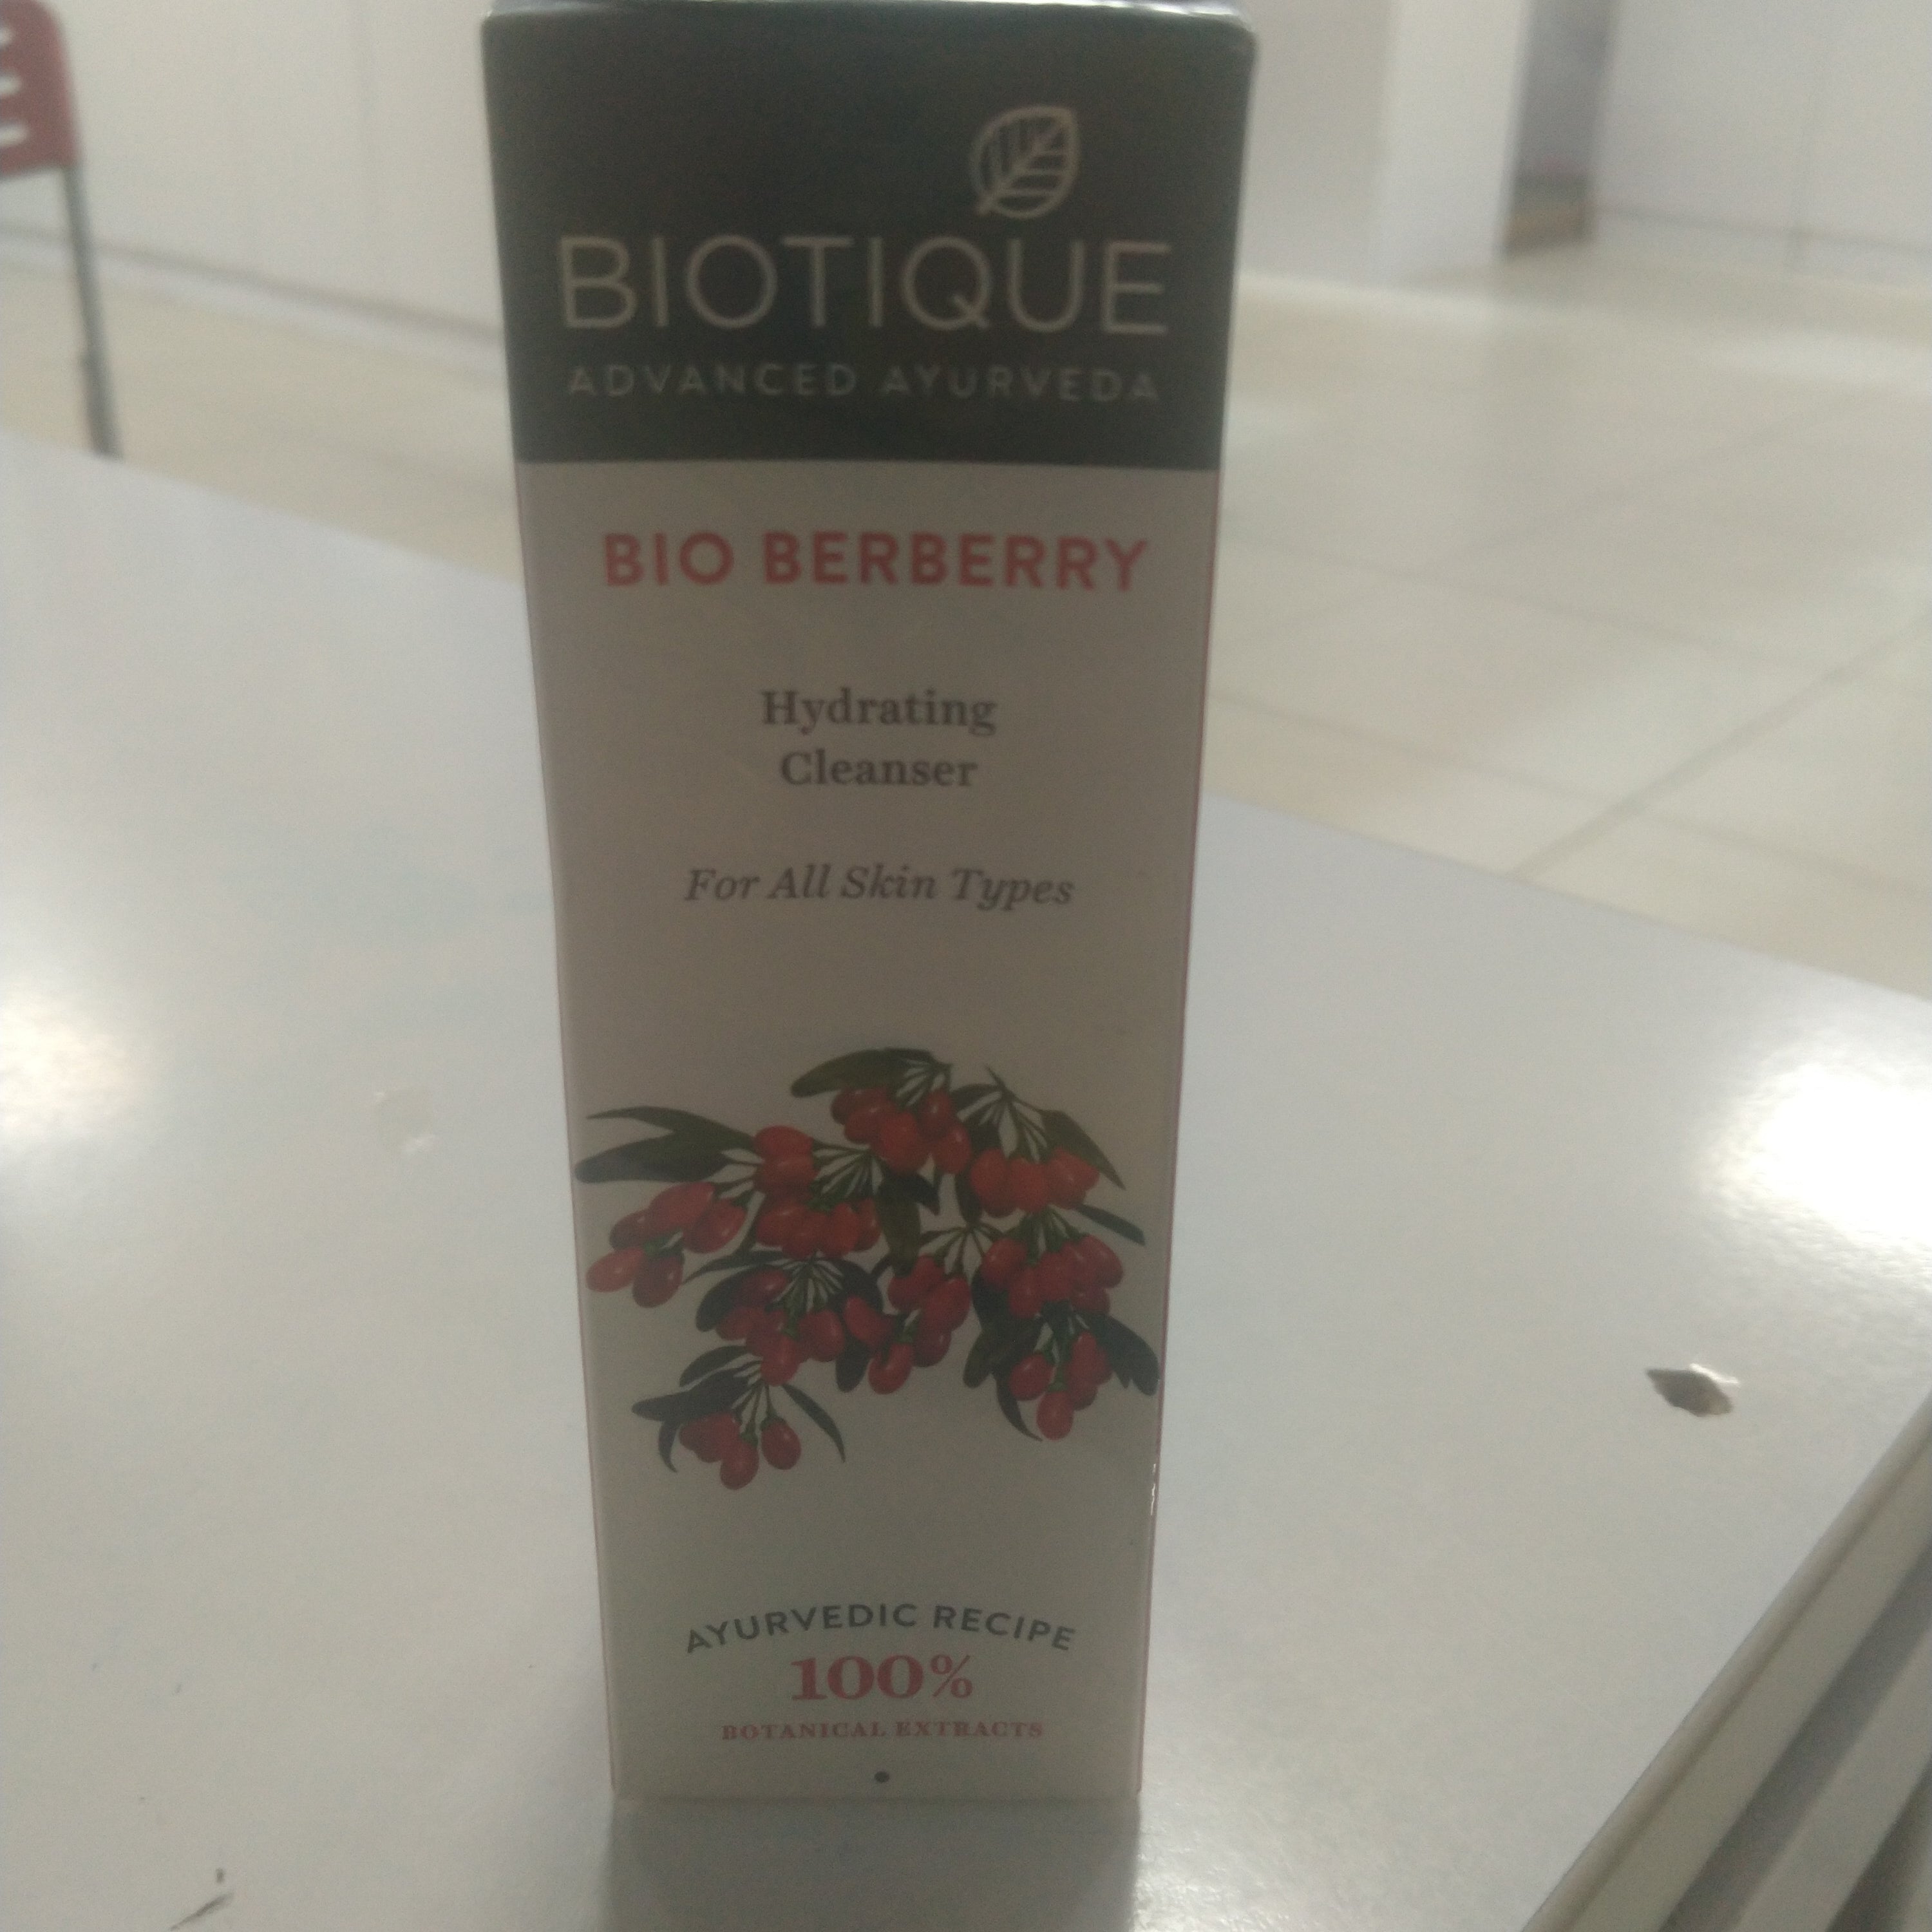 Biotique bio berberry hydrating cleanser 120ml